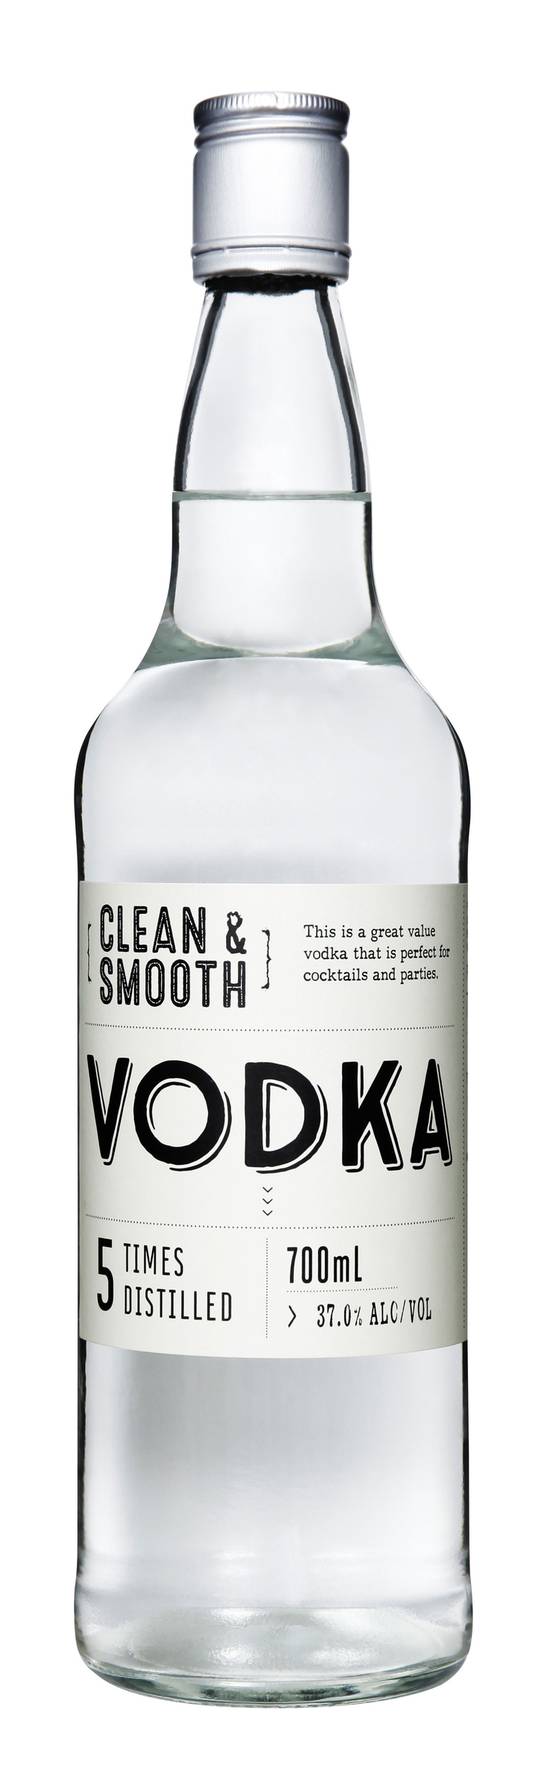 Cleanskin Vodka 700ml